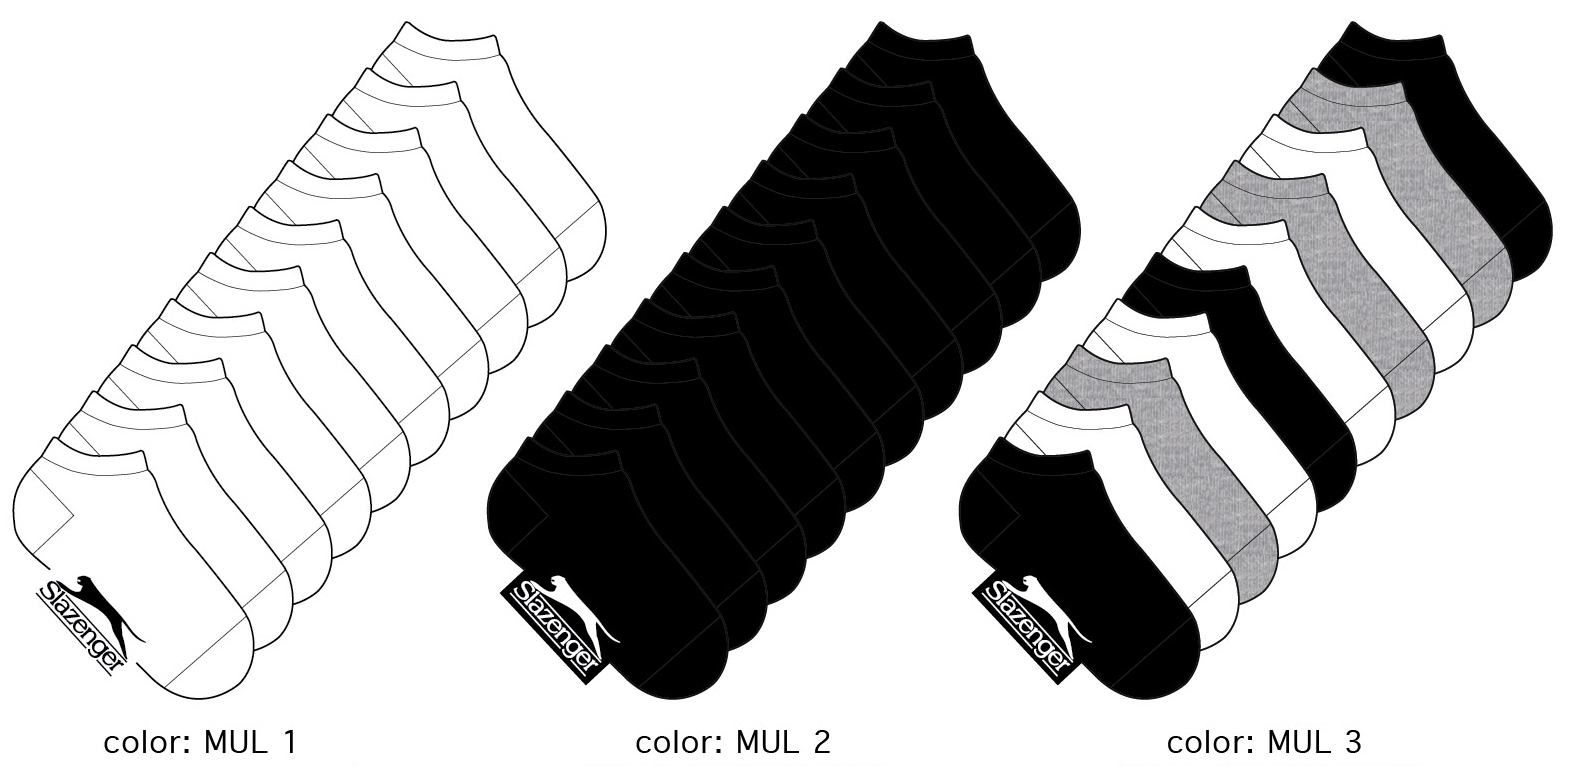 Slazenger Boy's Athletic Low Cut SOCKS - Solid Colors - Size 6-8 - 10-Pair Packs